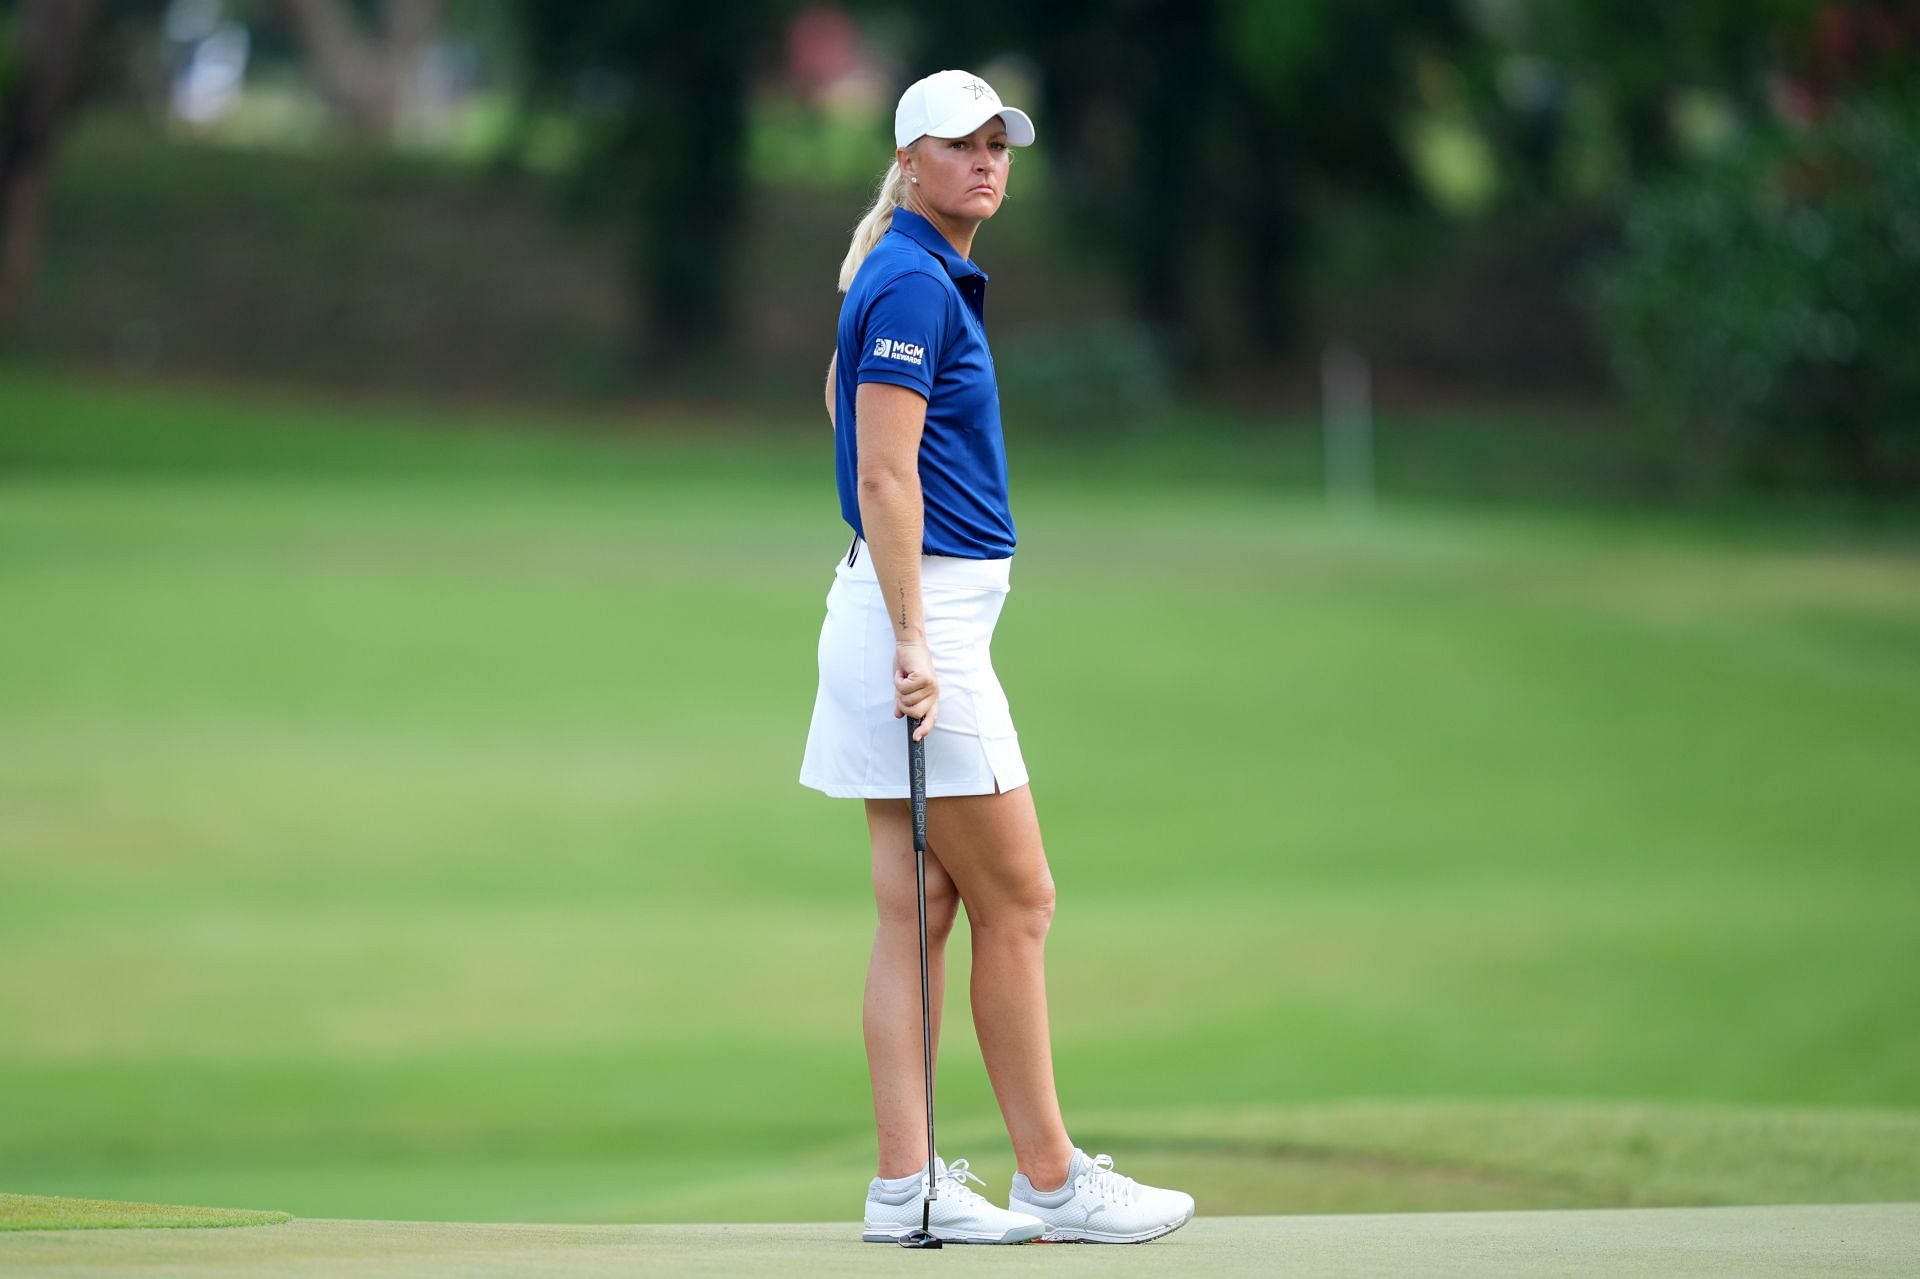 Anna Nordqvist during the Honda LPGA Thailand